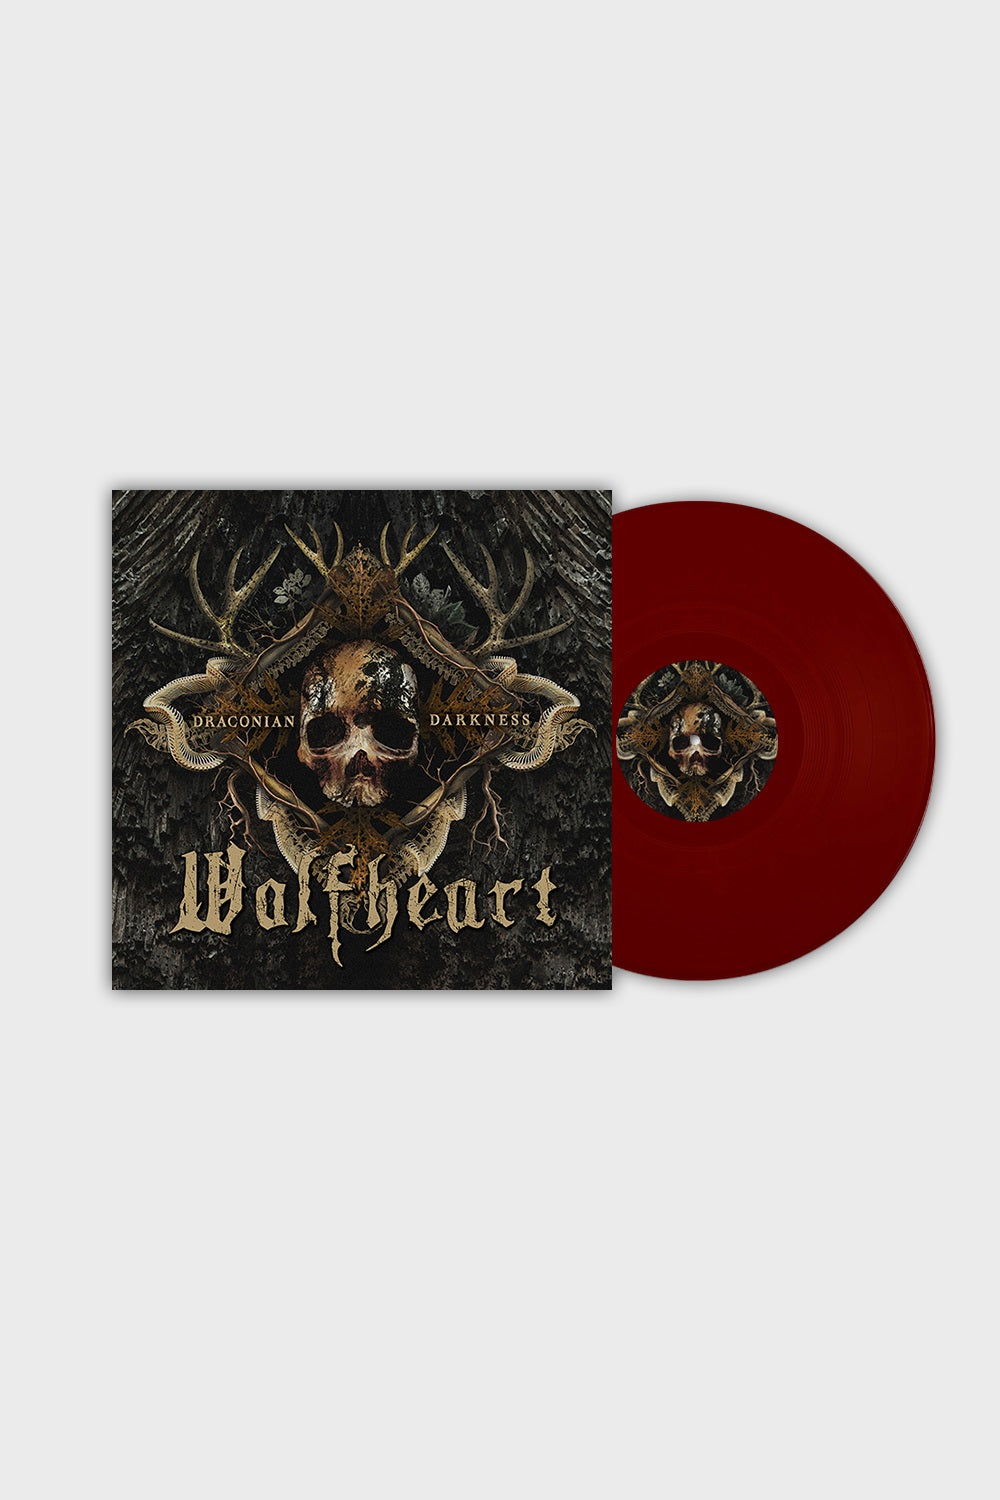 Wolfheart "Draconian Darkness" 180g Oxblood Vinyl - PRE-ORDER